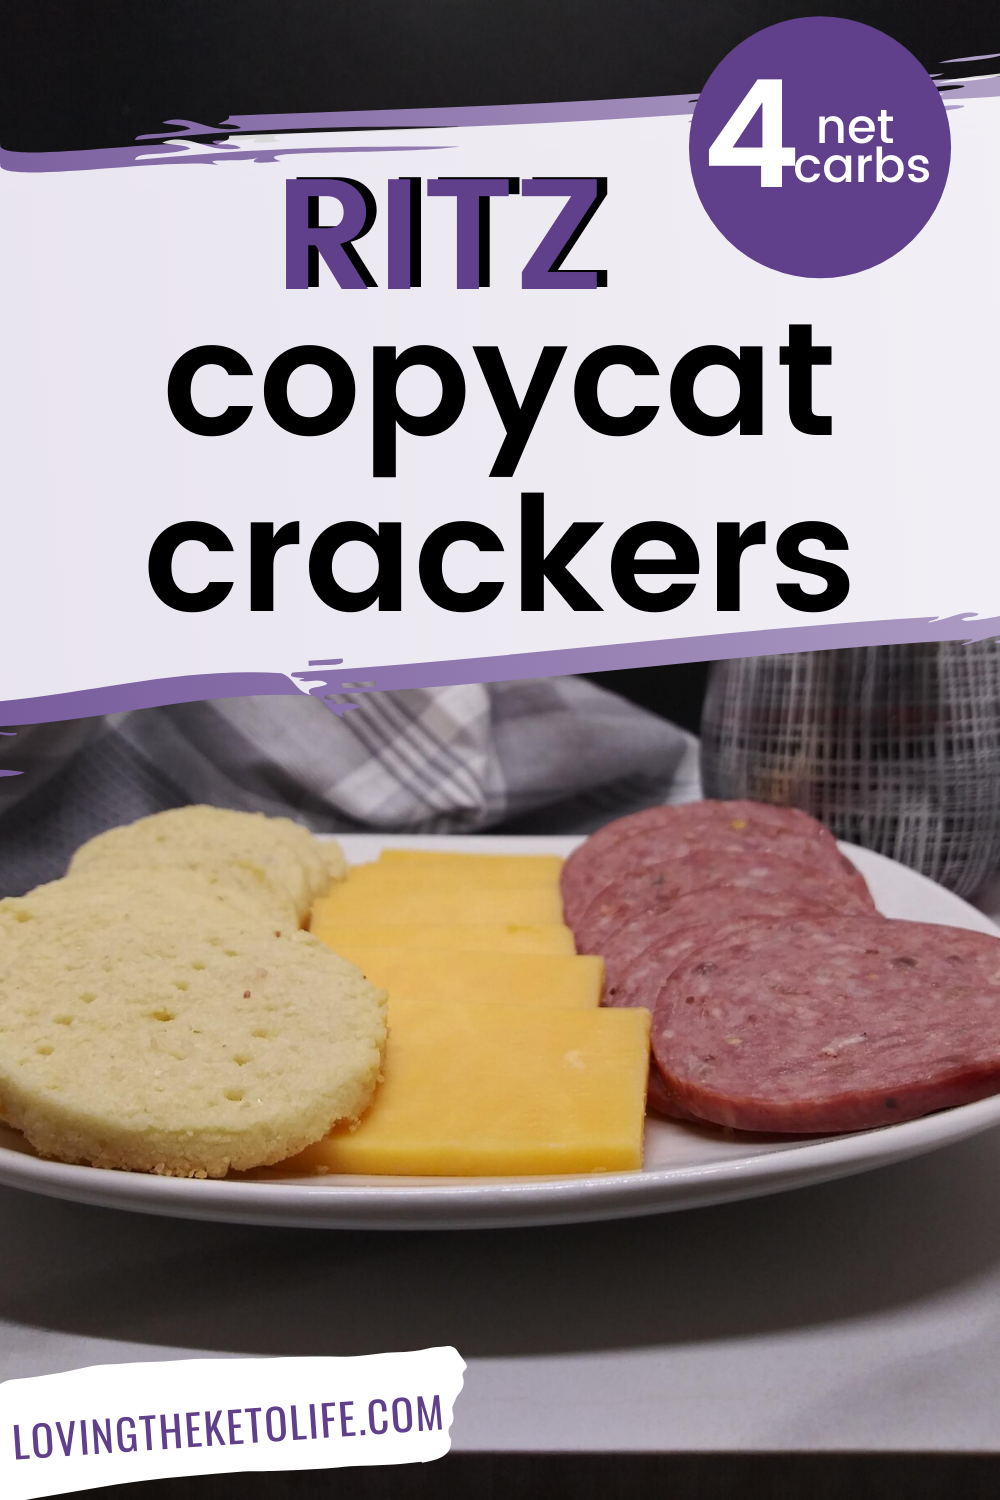 Ritz Copycat Crackers - Keto Style